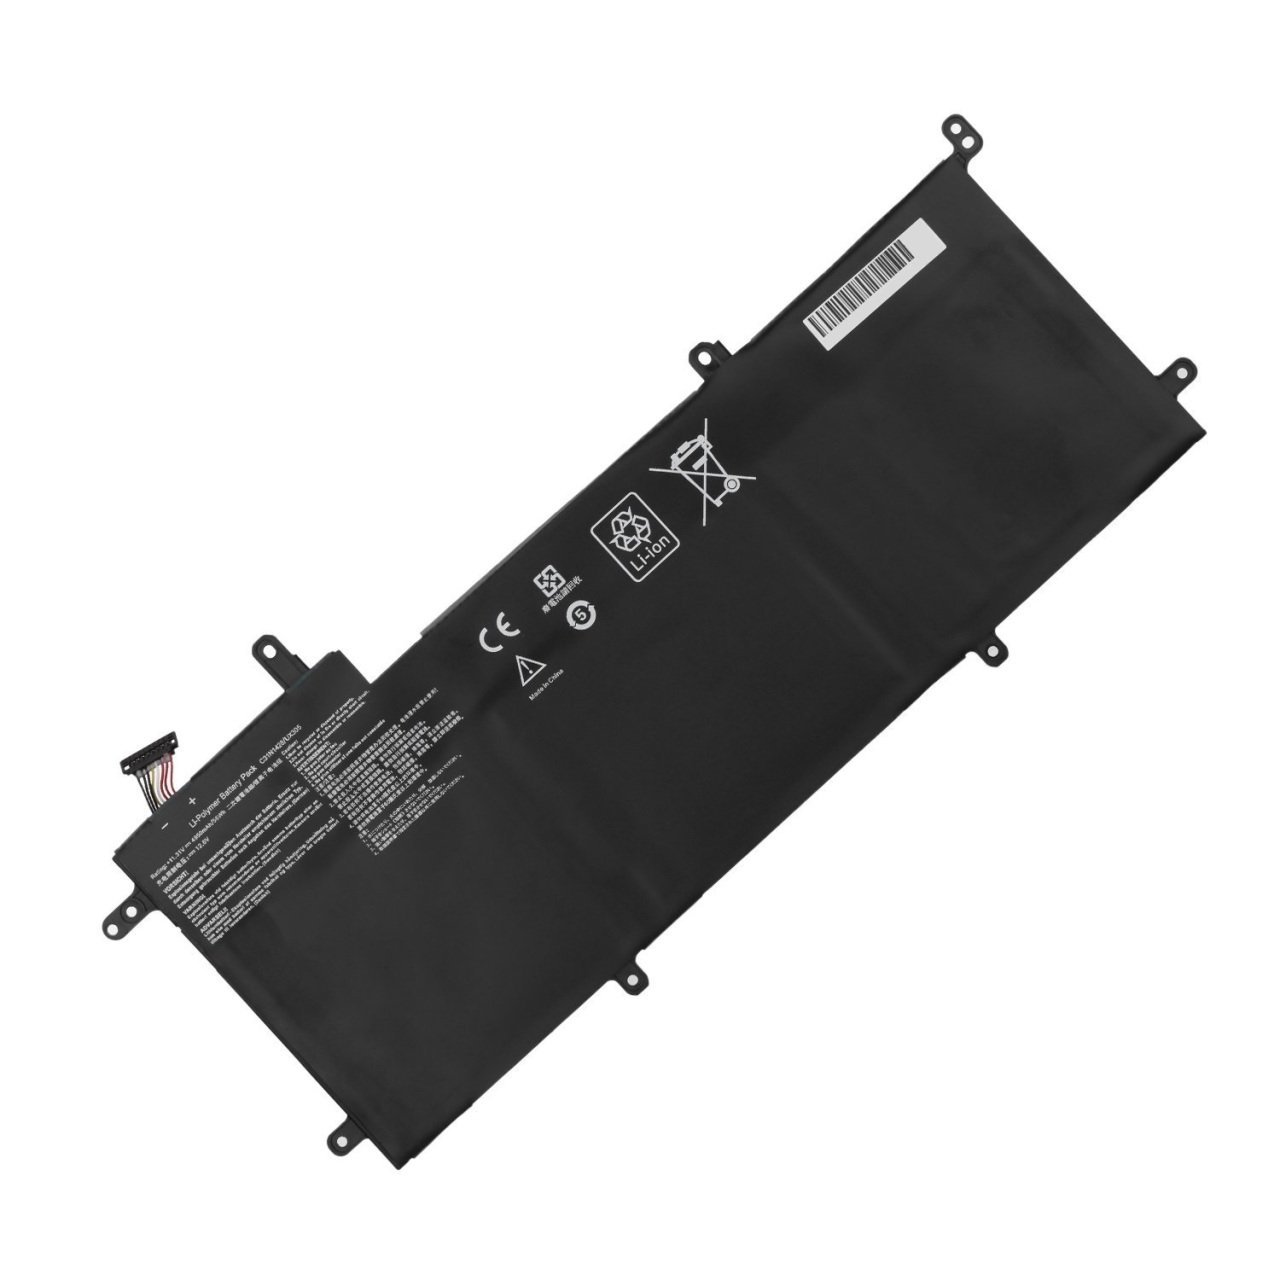 ASUS Zenbook C31N1428 UX305L UX305LA UX305UA Batarya A+++ Pil Güçlü Güvenli